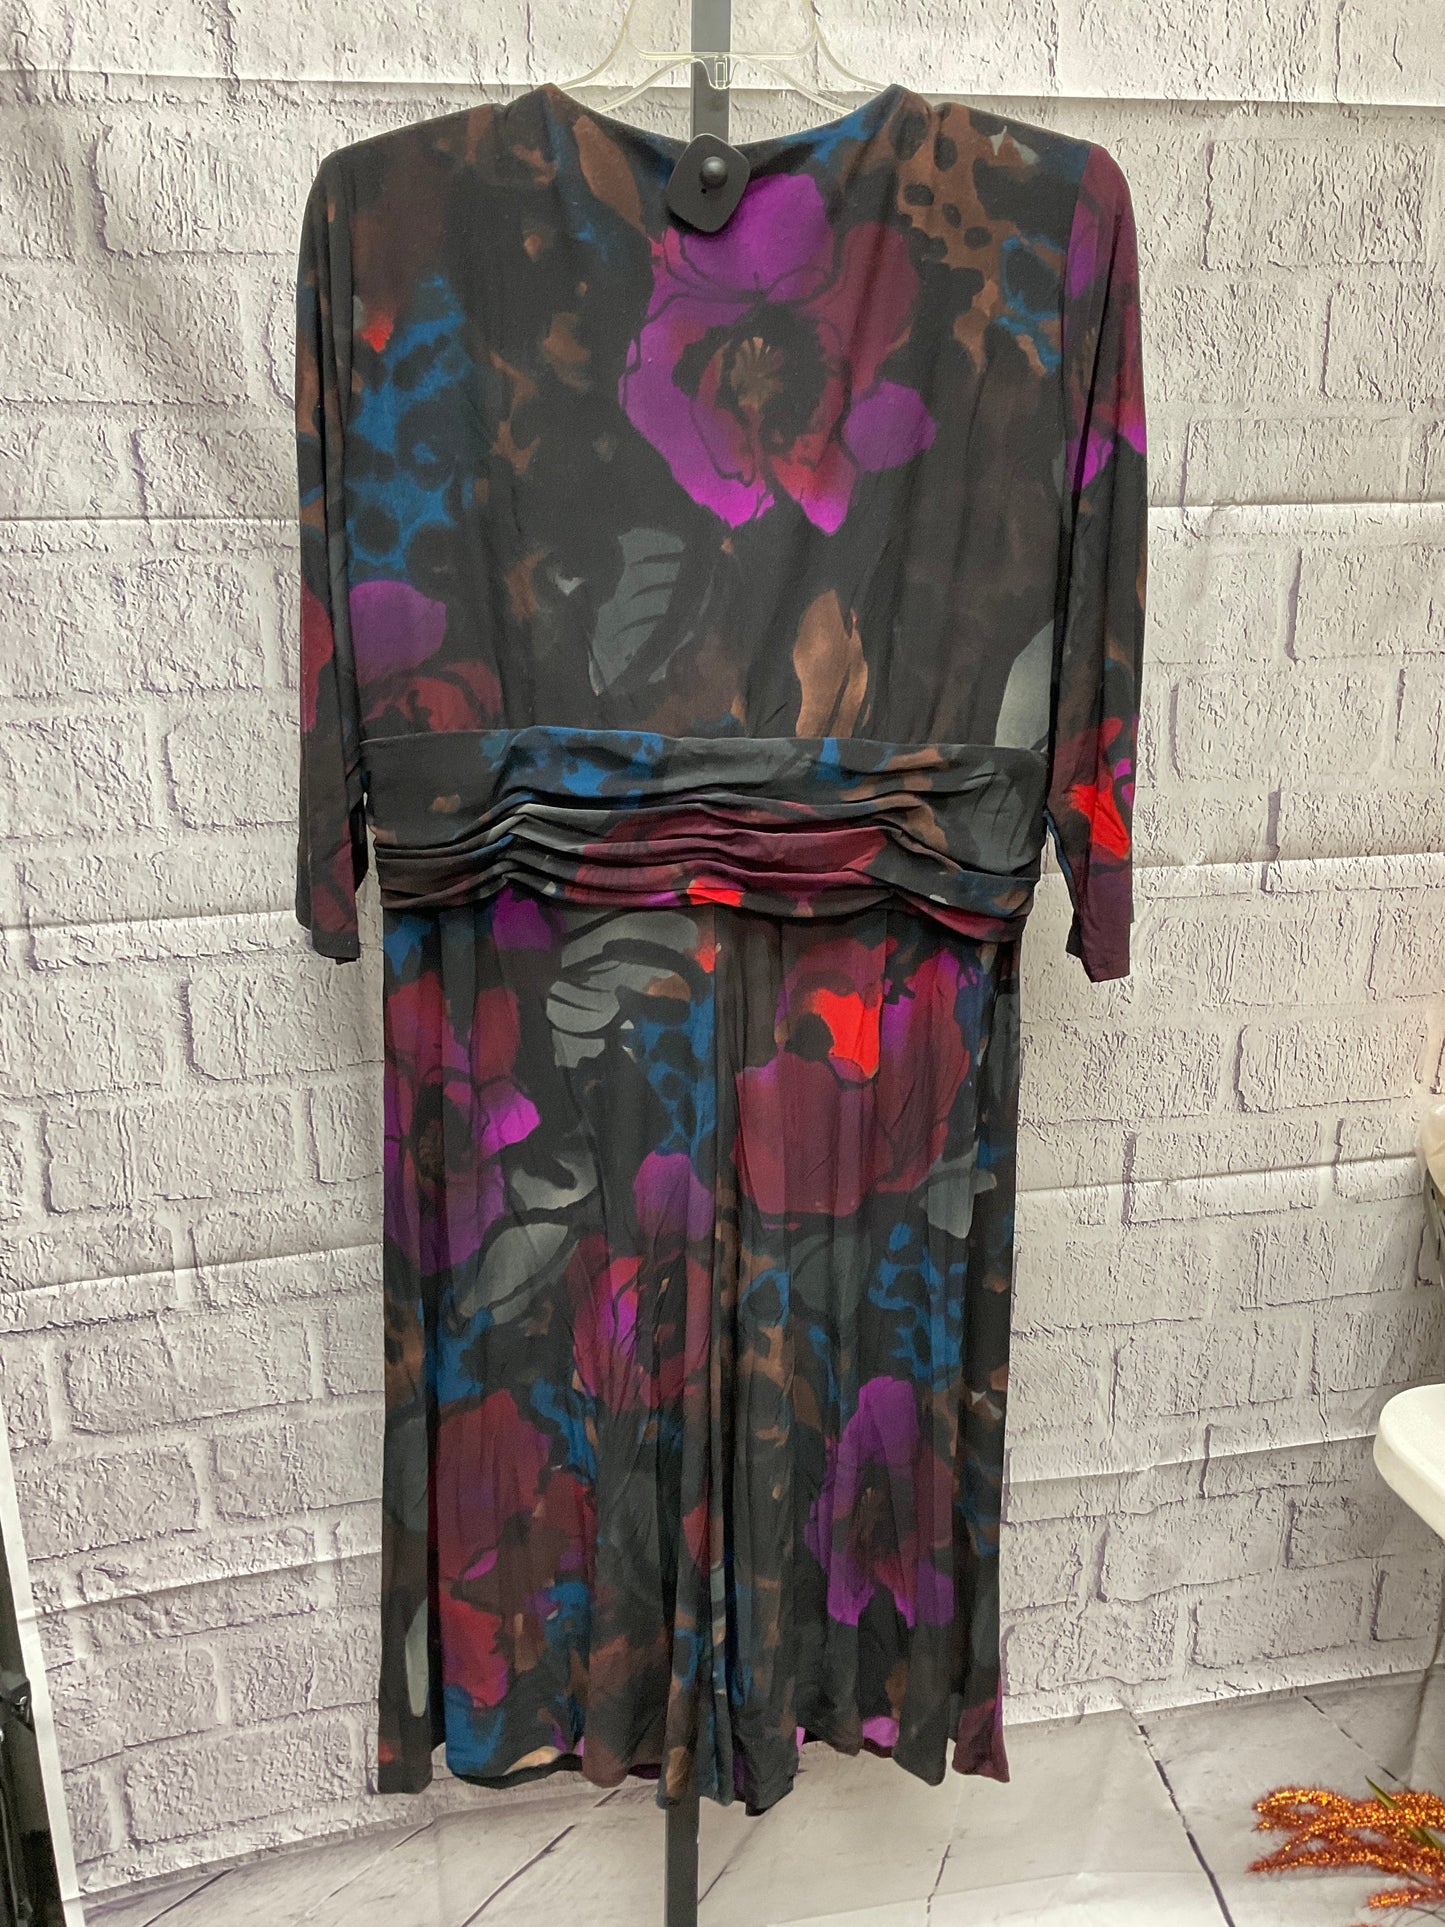 Dress Casual Midi By Jones New York  Size: 22womens